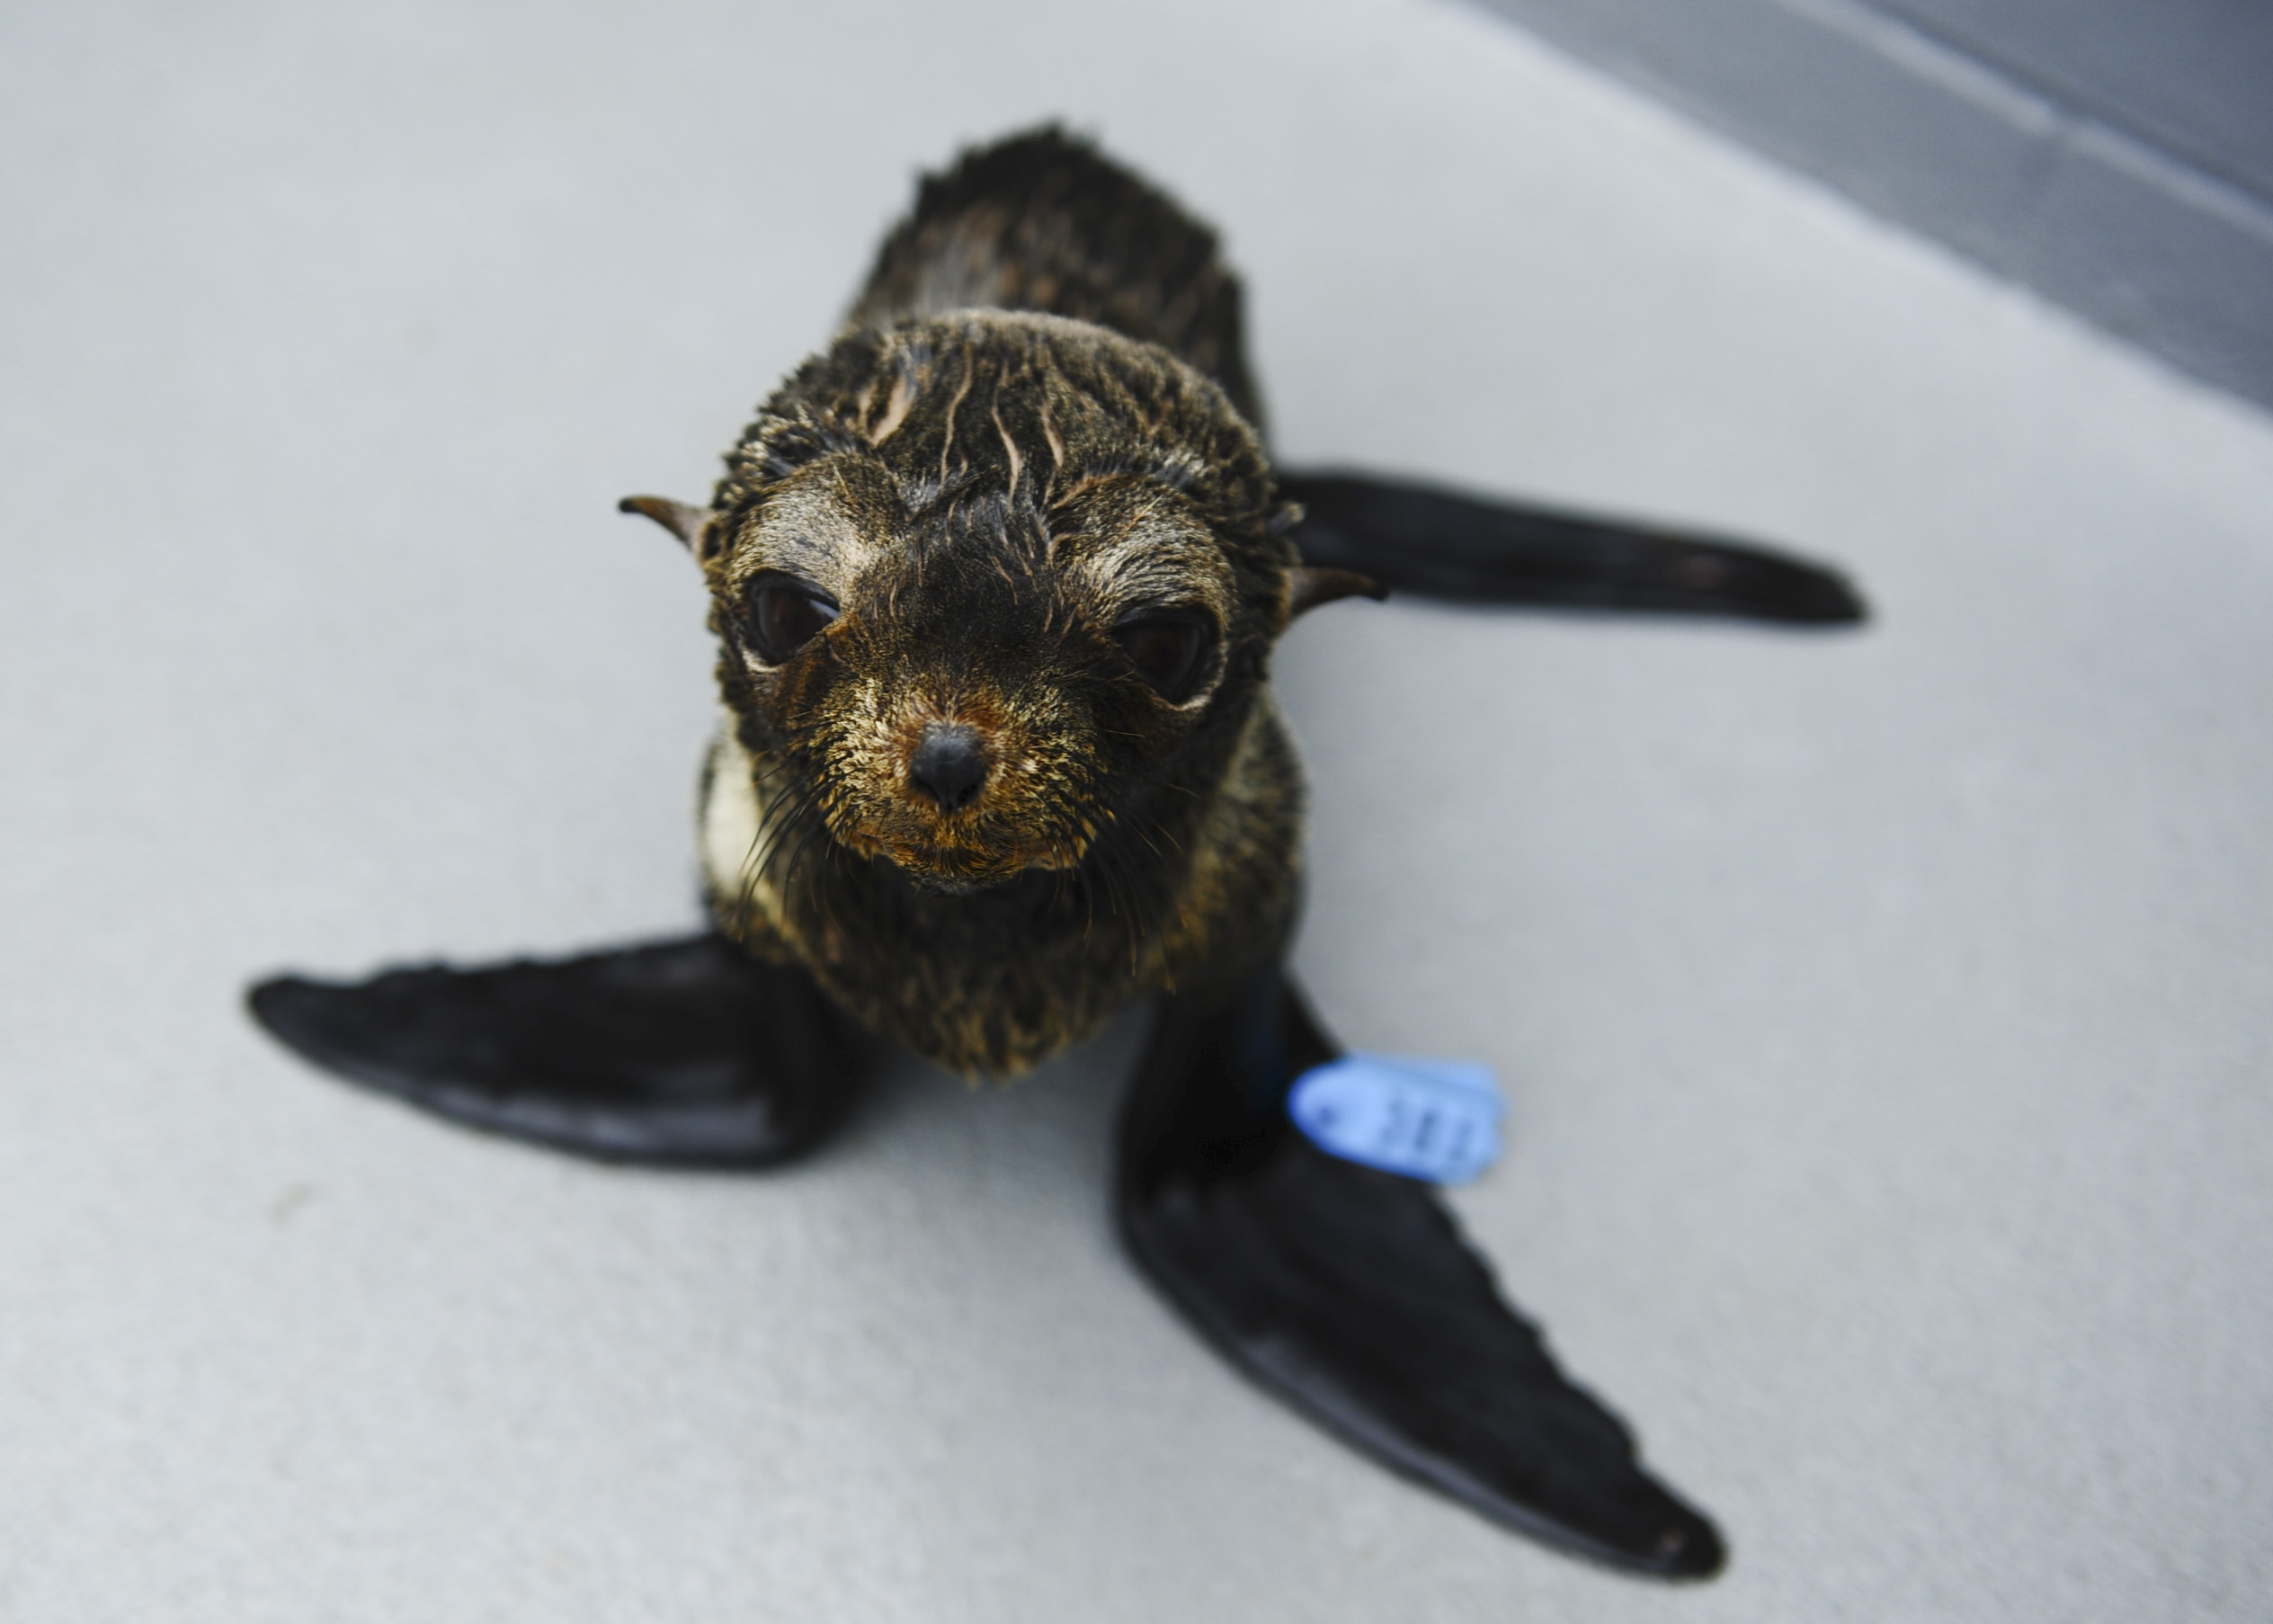 Guadalupe Fur Seals Dying Along California Coast - capradio.org